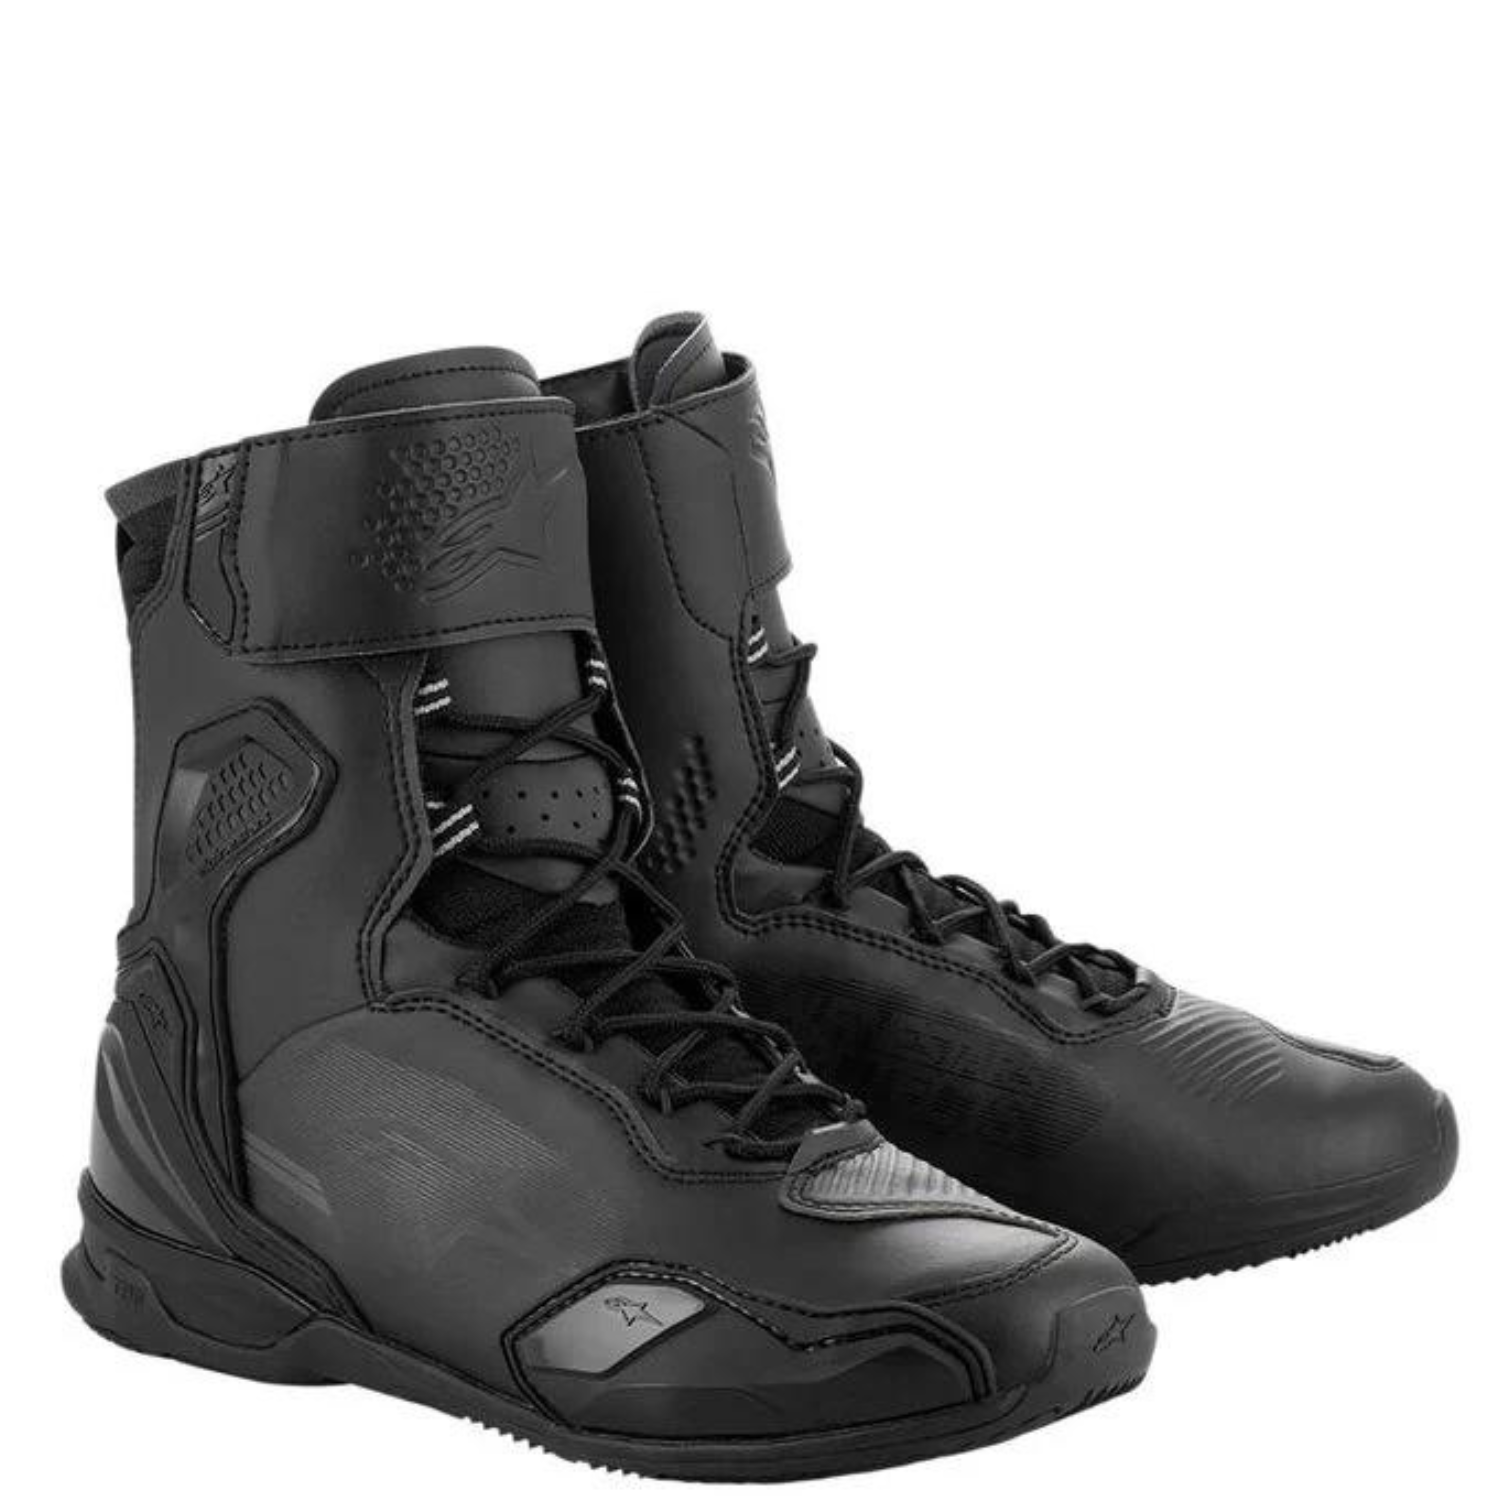 Image of Alpinestars Superfaster Shoes Black Size US 12 ID 8059347260693